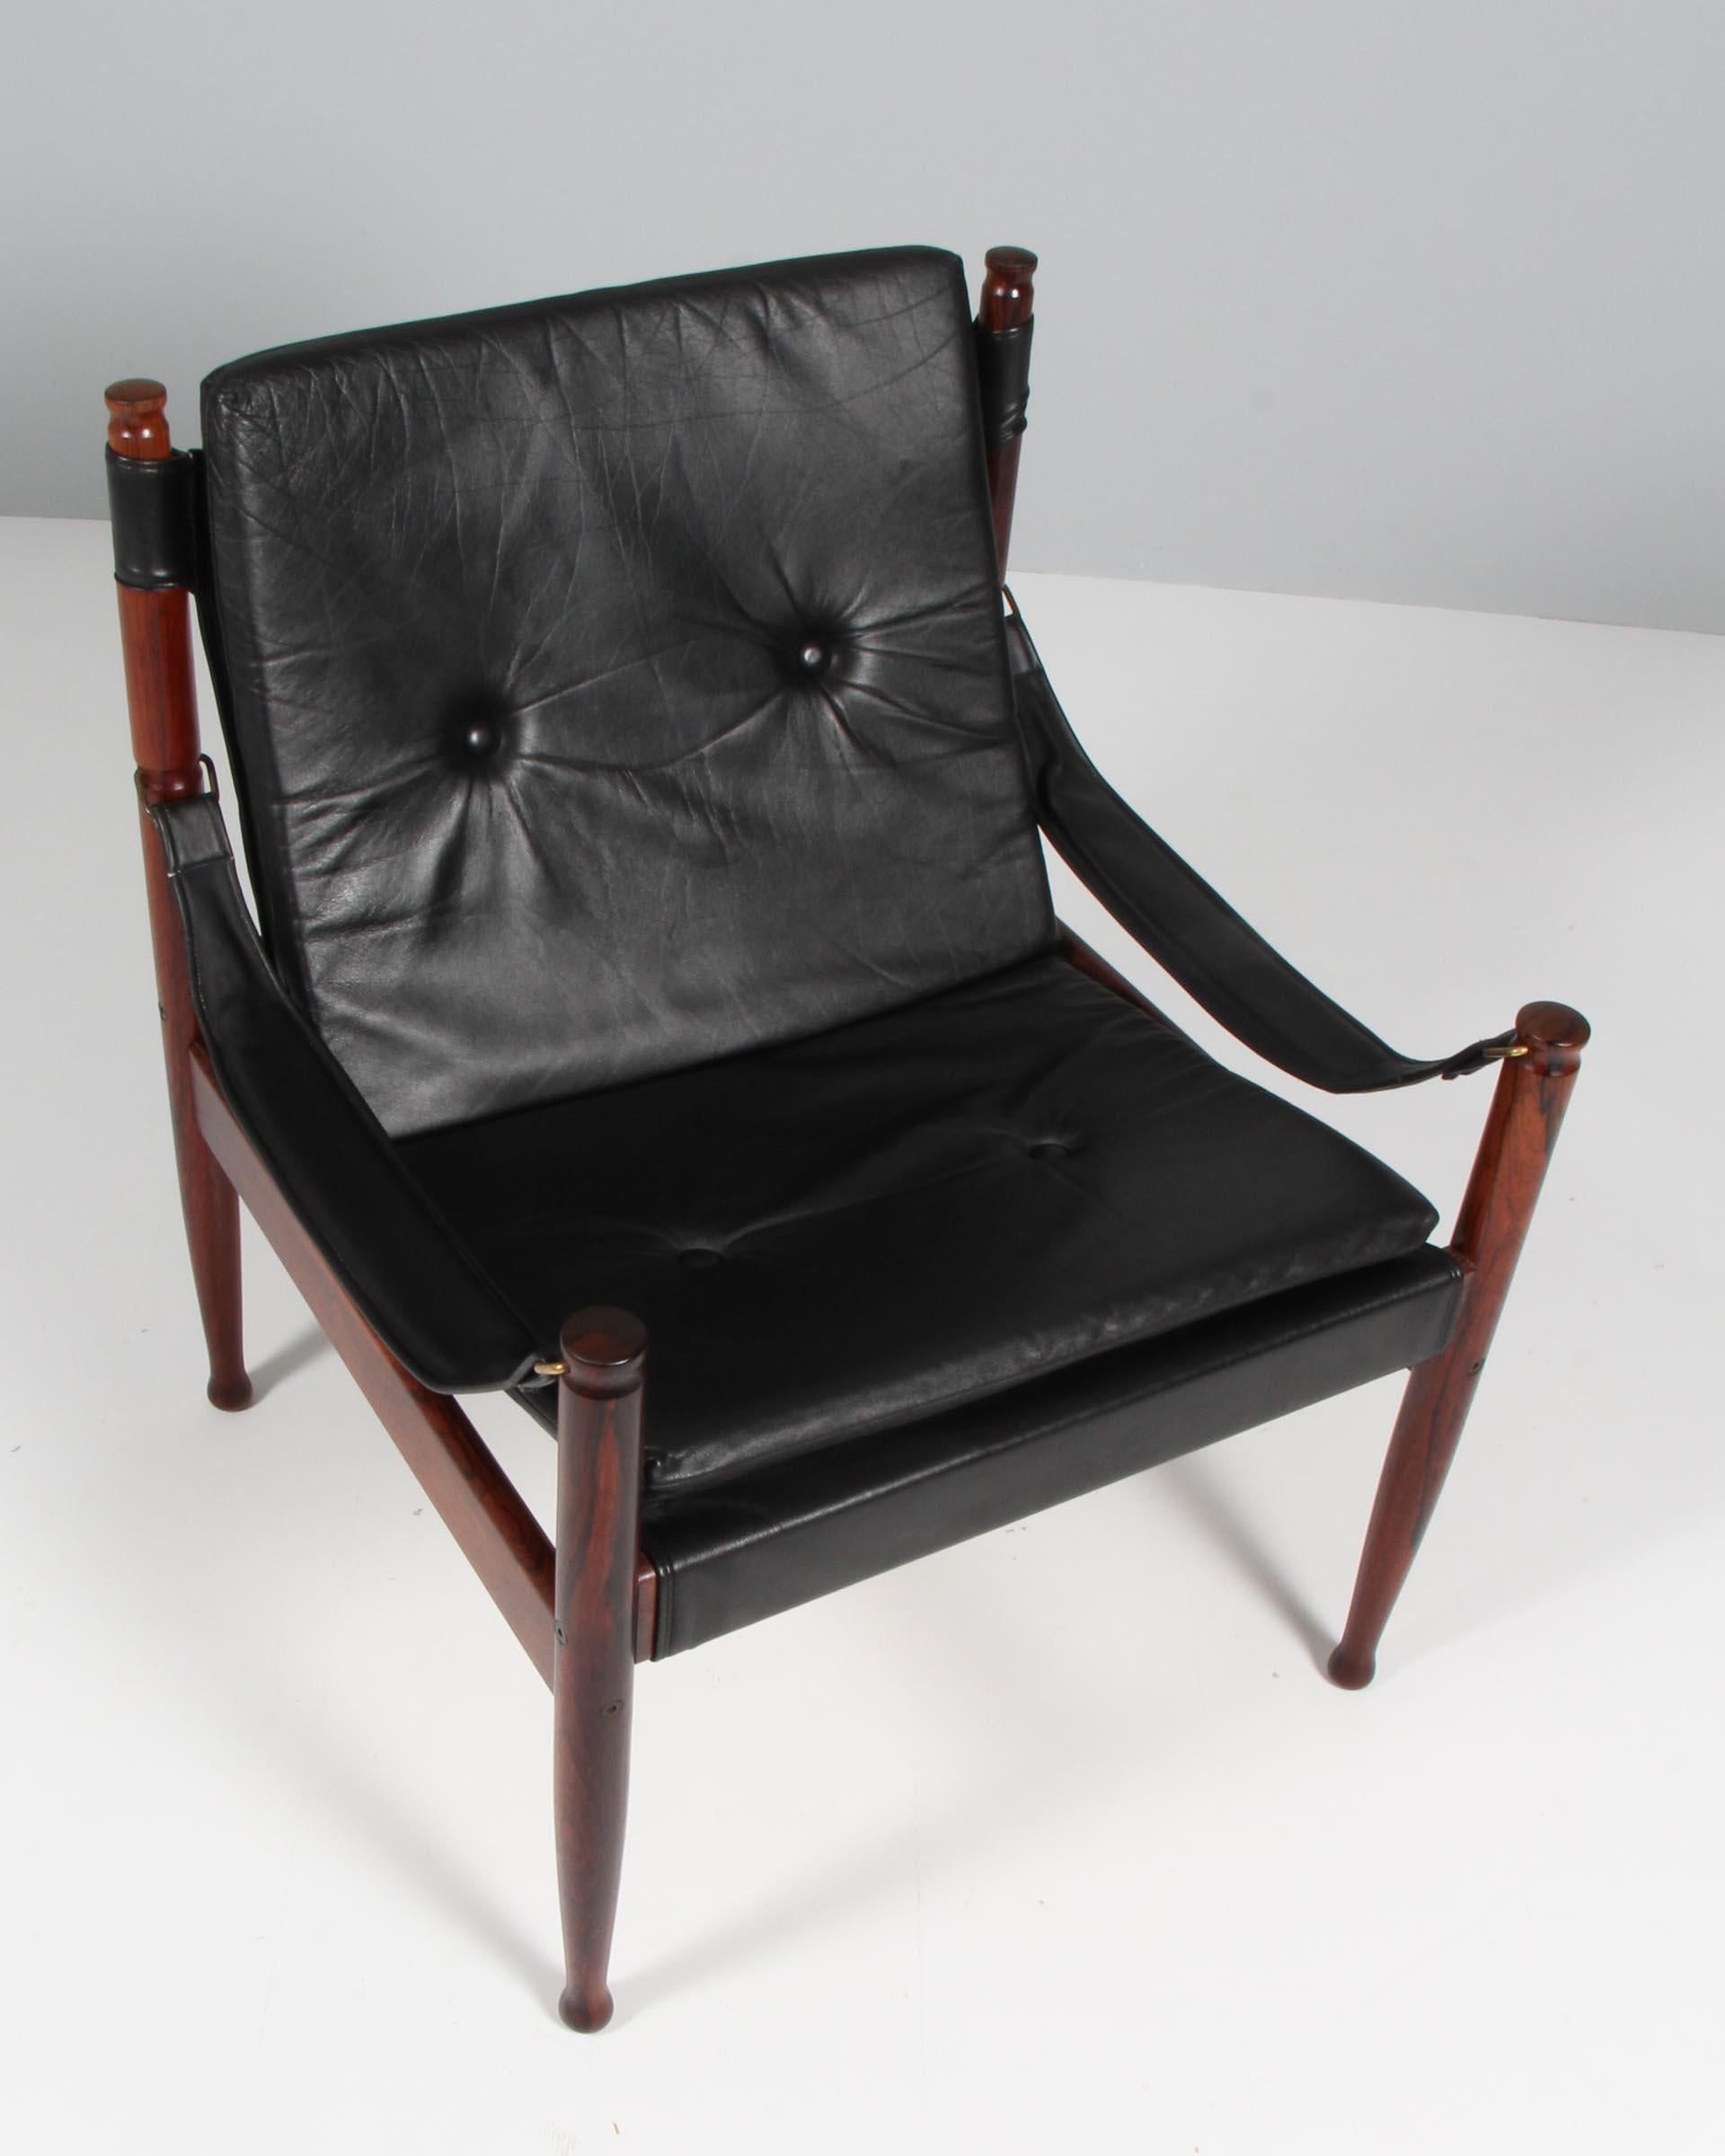 Erik Wørts safarichair made in solid rosewood. 

Original black patinated leather upholstery.

Made by N. Eilersen.
 